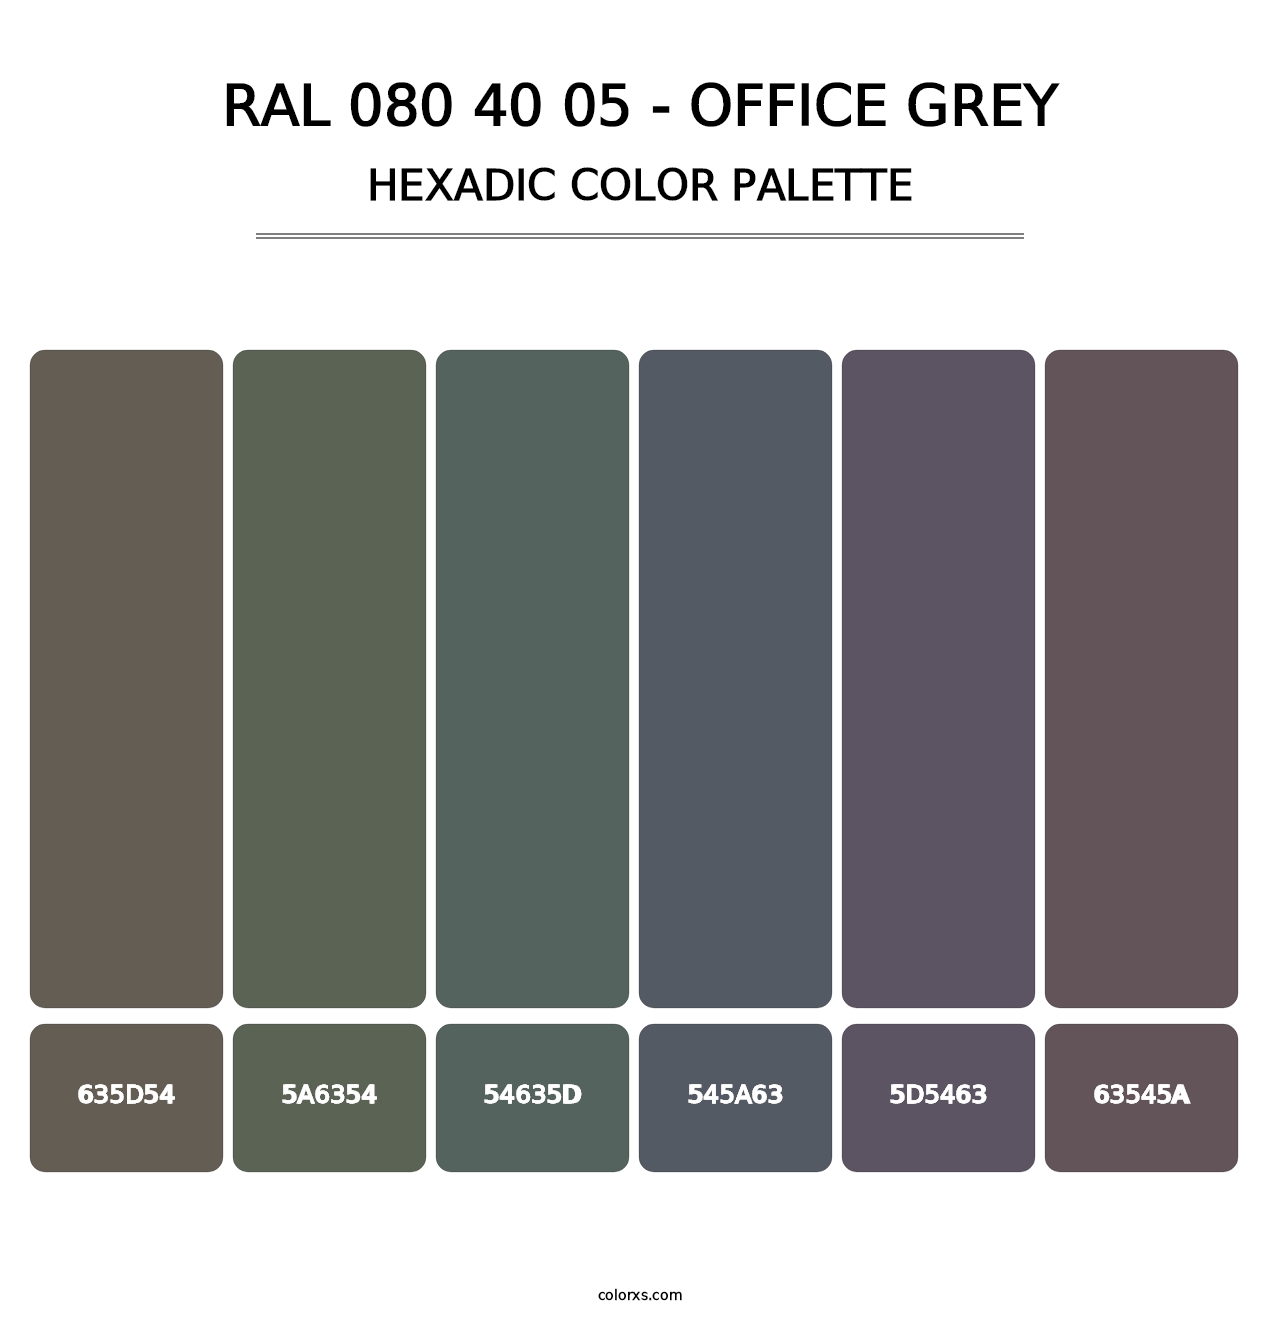 RAL 080 40 05 - Office Grey - Hexadic Color Palette